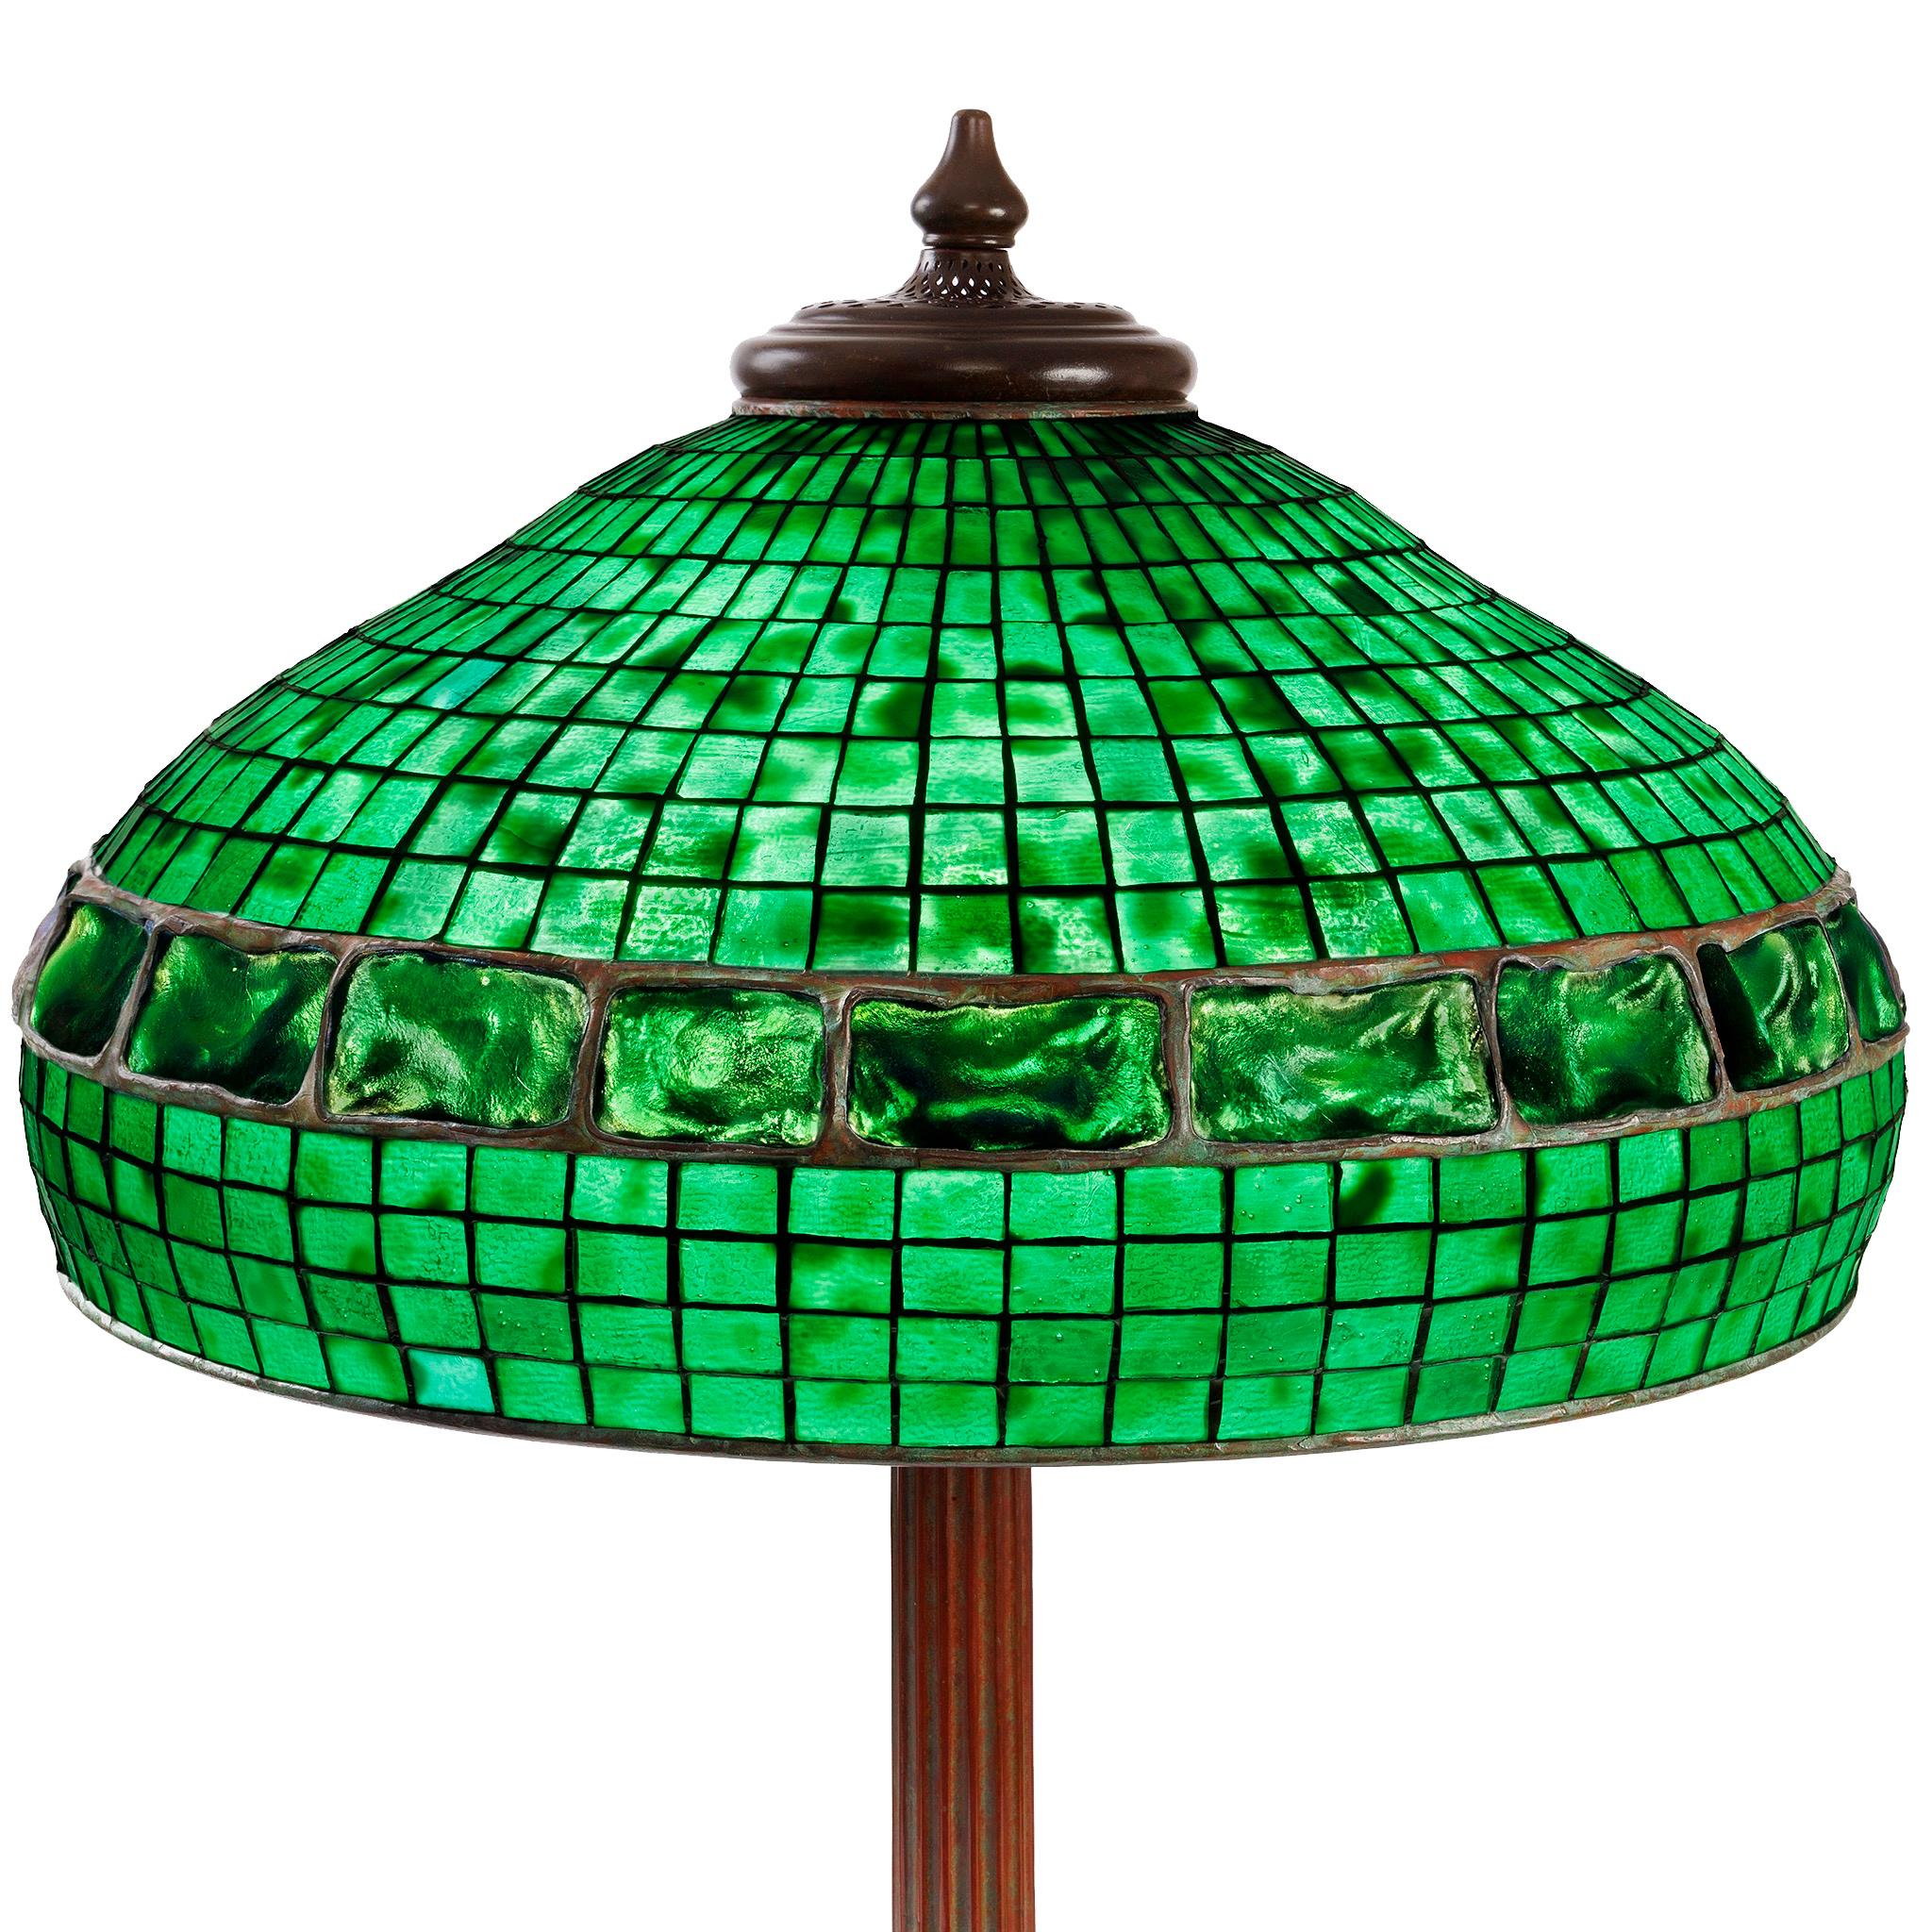 Art nouveau Tiffany Studios New York, lampe de table « Turtleback » ceinturée en vente